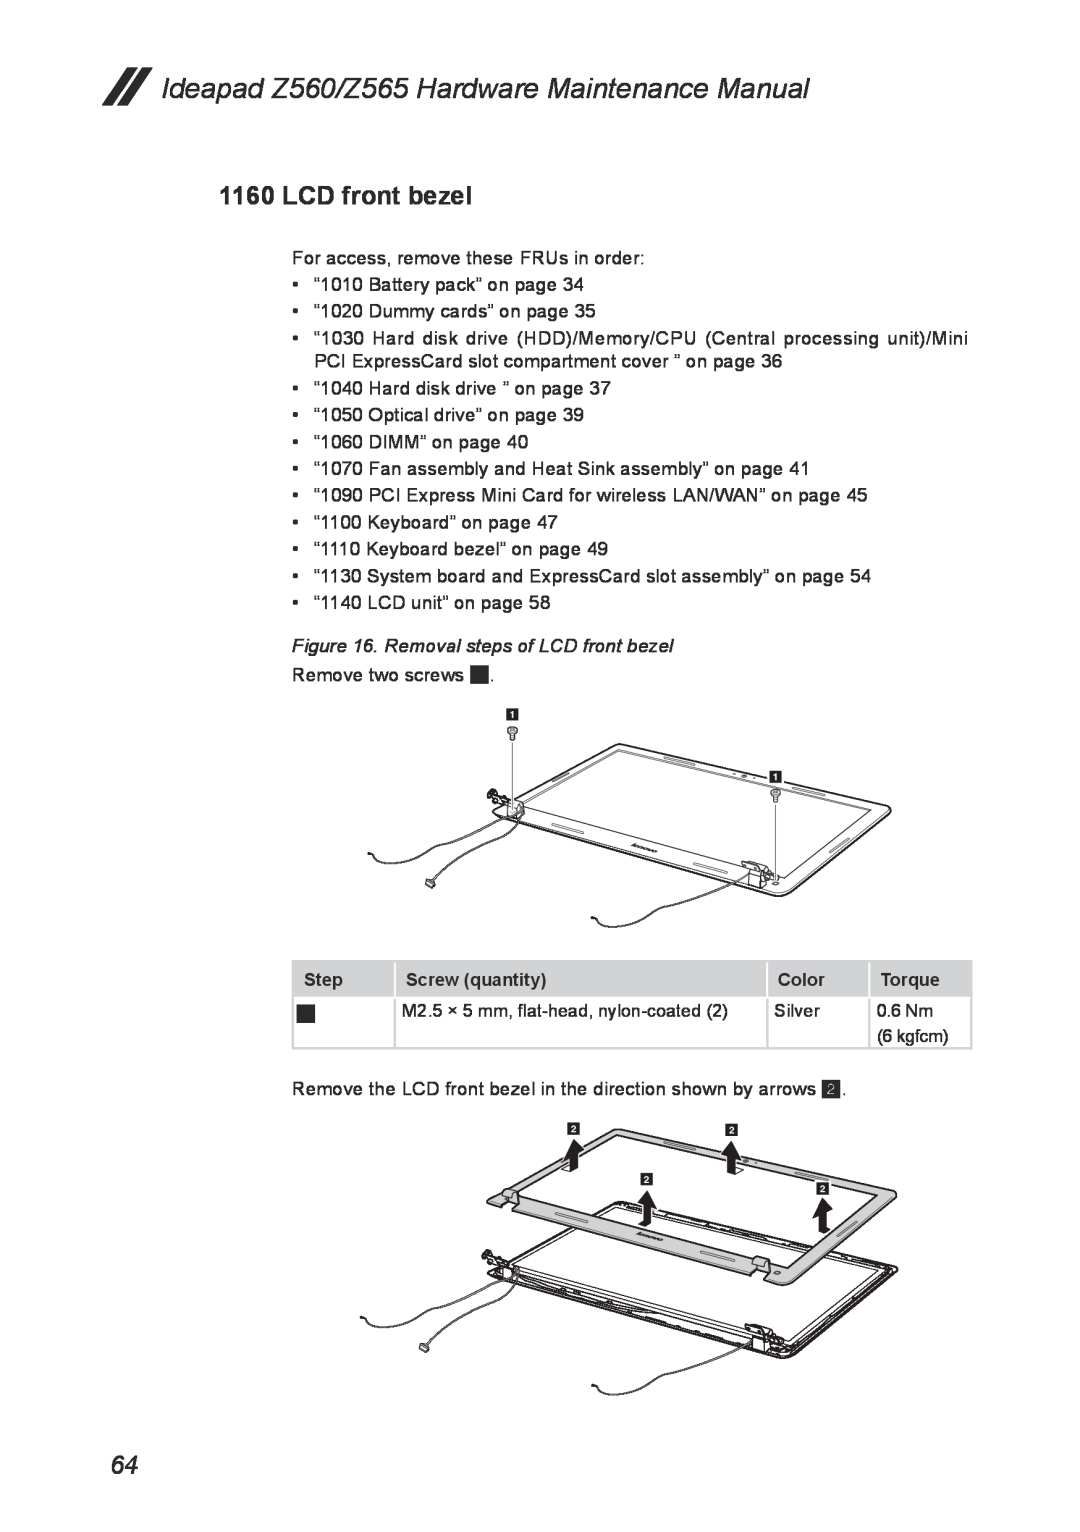 Lenovo manual Removal steps of LCD front bezel, Ideapad Z560/Z565 Hardware Maintenance Manual 